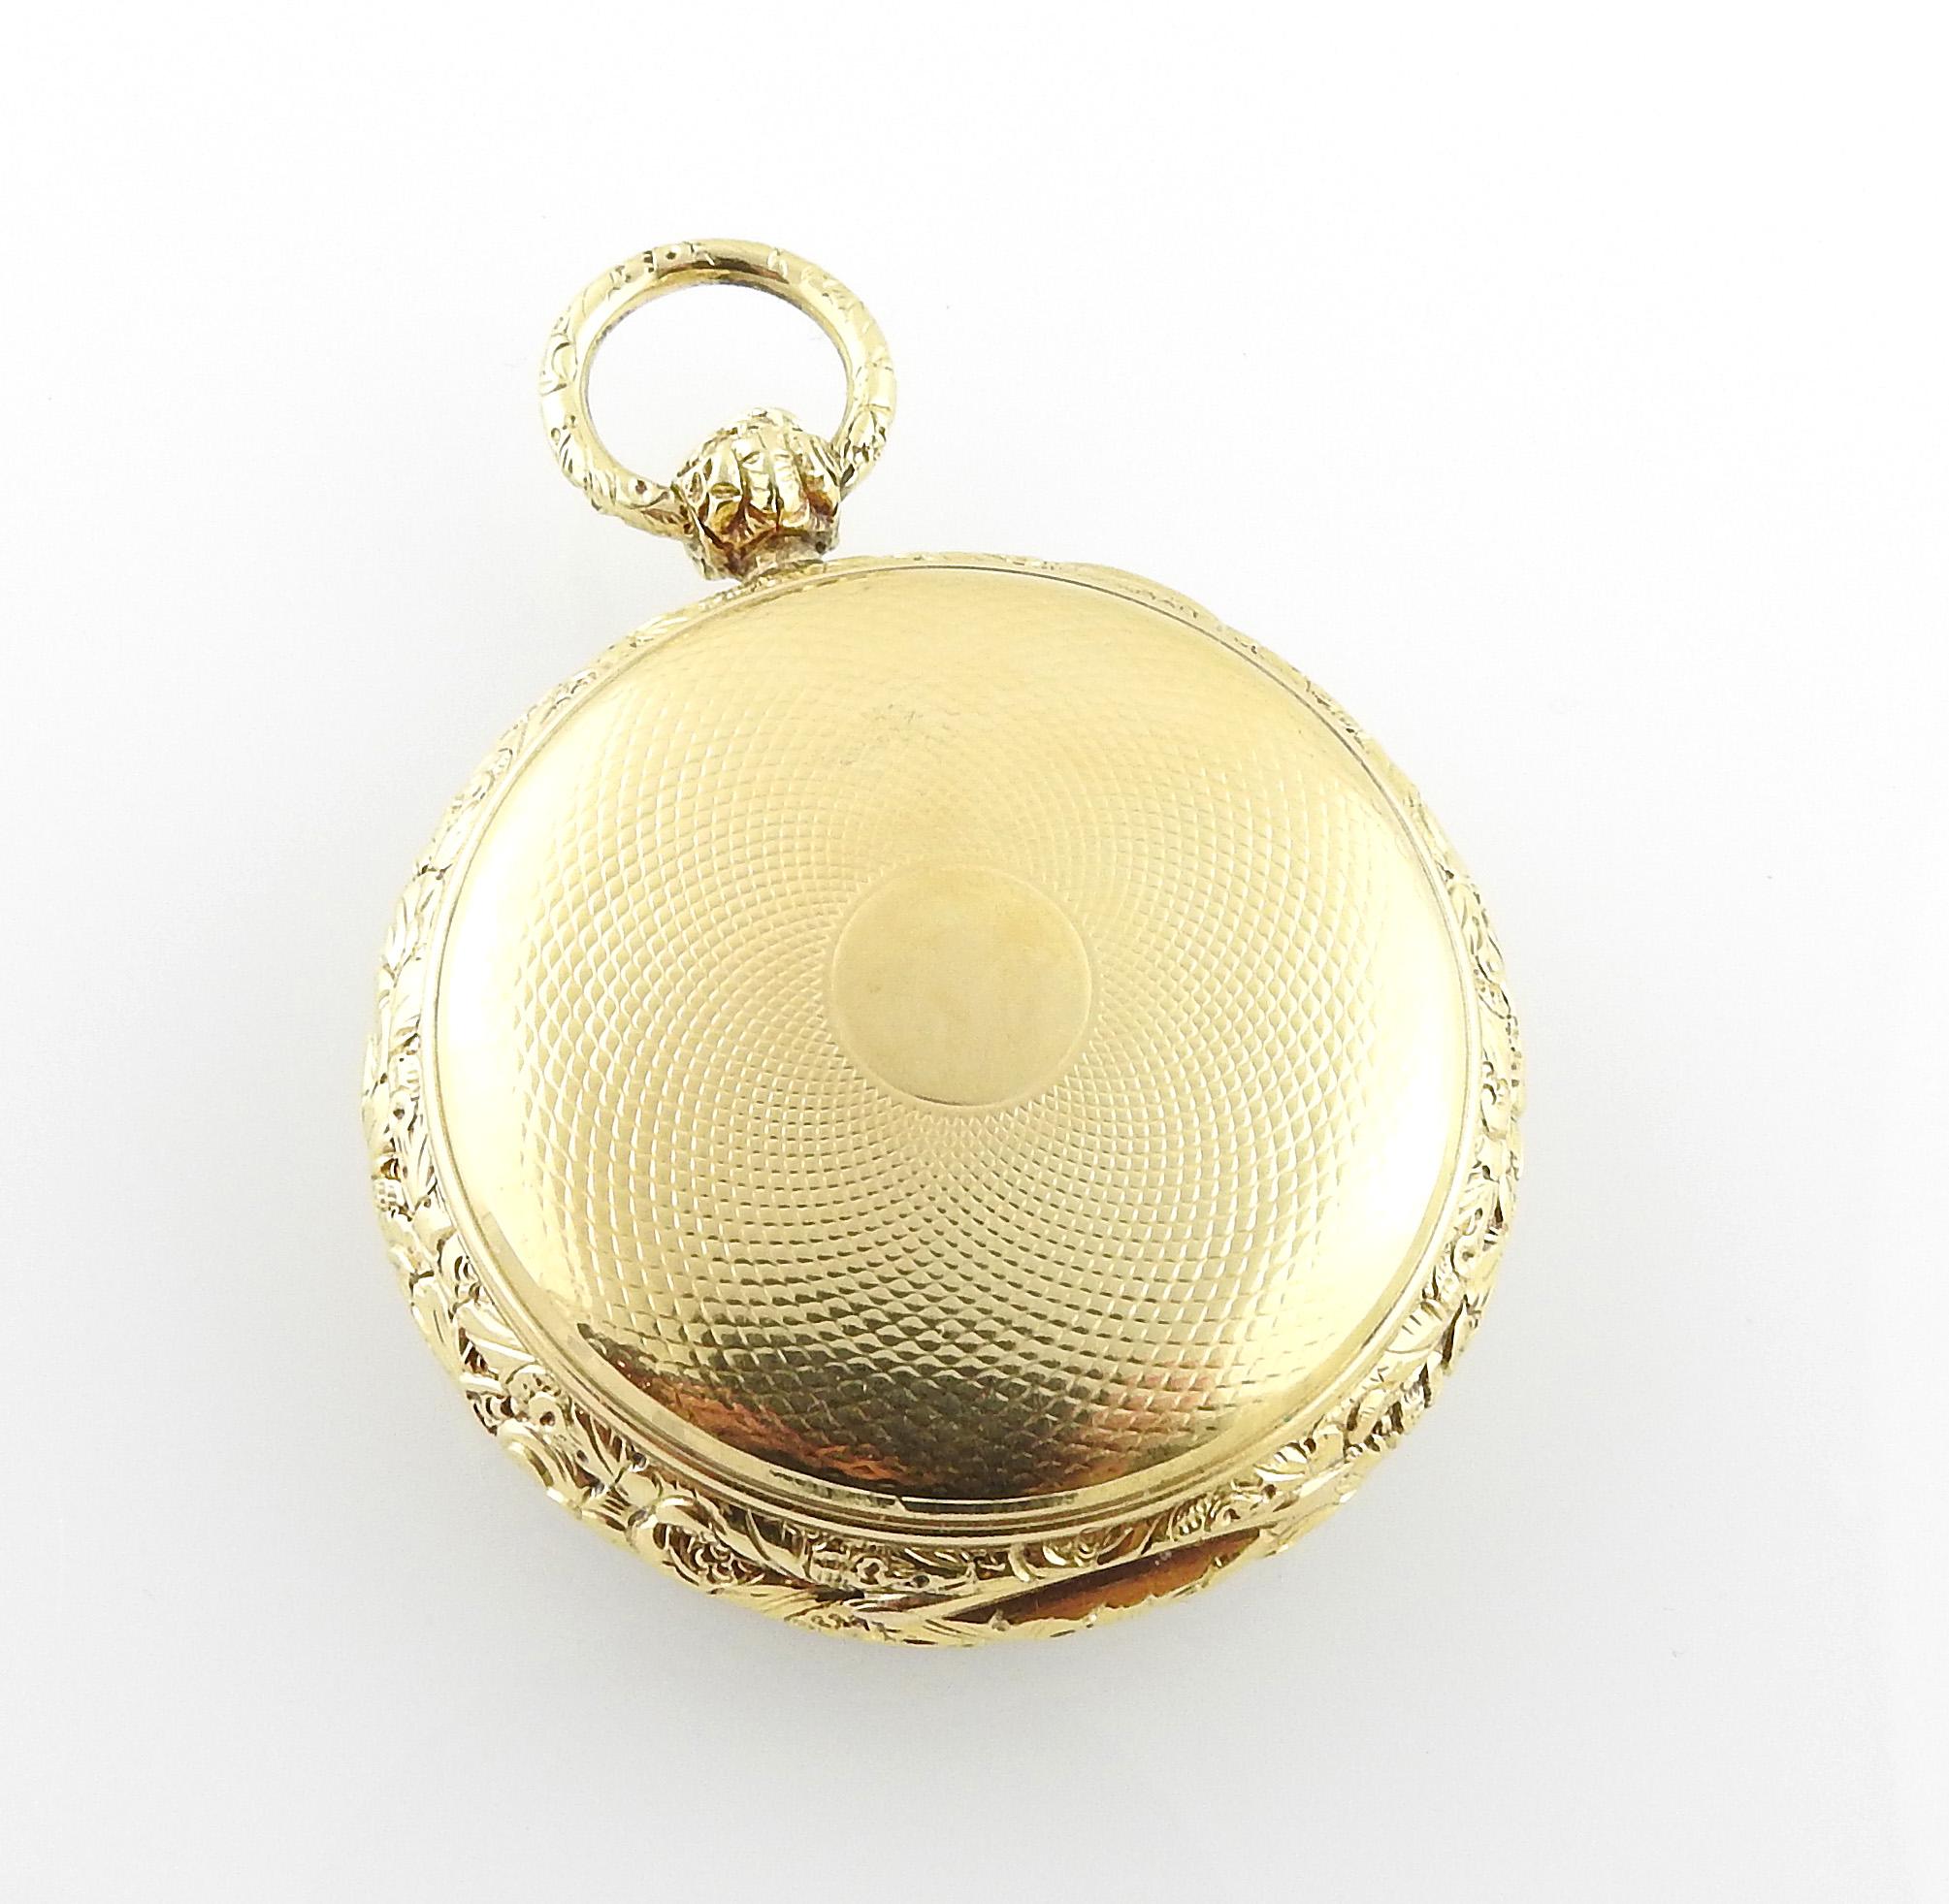 Verge Crown Wheel Key Winding 18K Yellow Gold Ornate Pocket Watch For Sale 2